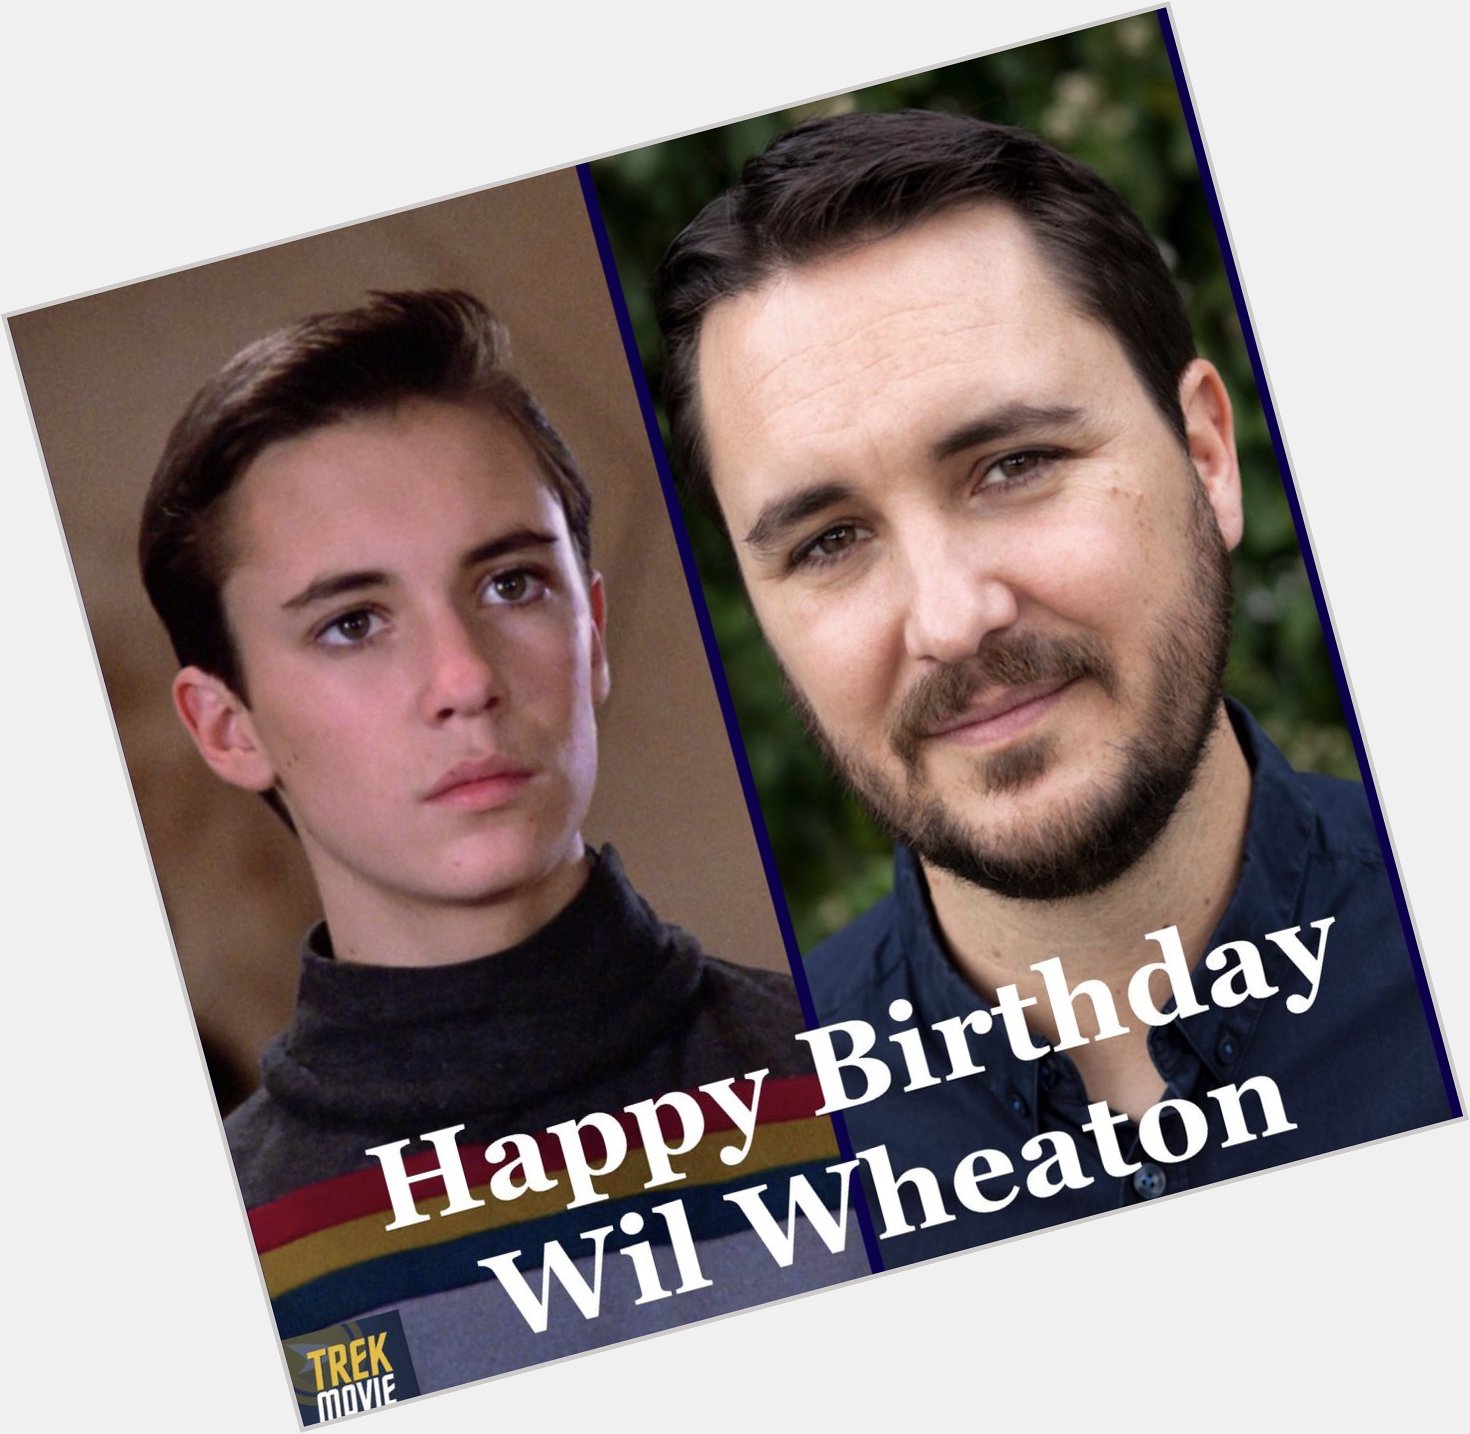 Wishing a very happy birthday to Wil Wheaton, aka Ensign Wesley Crusher on Star Trek  